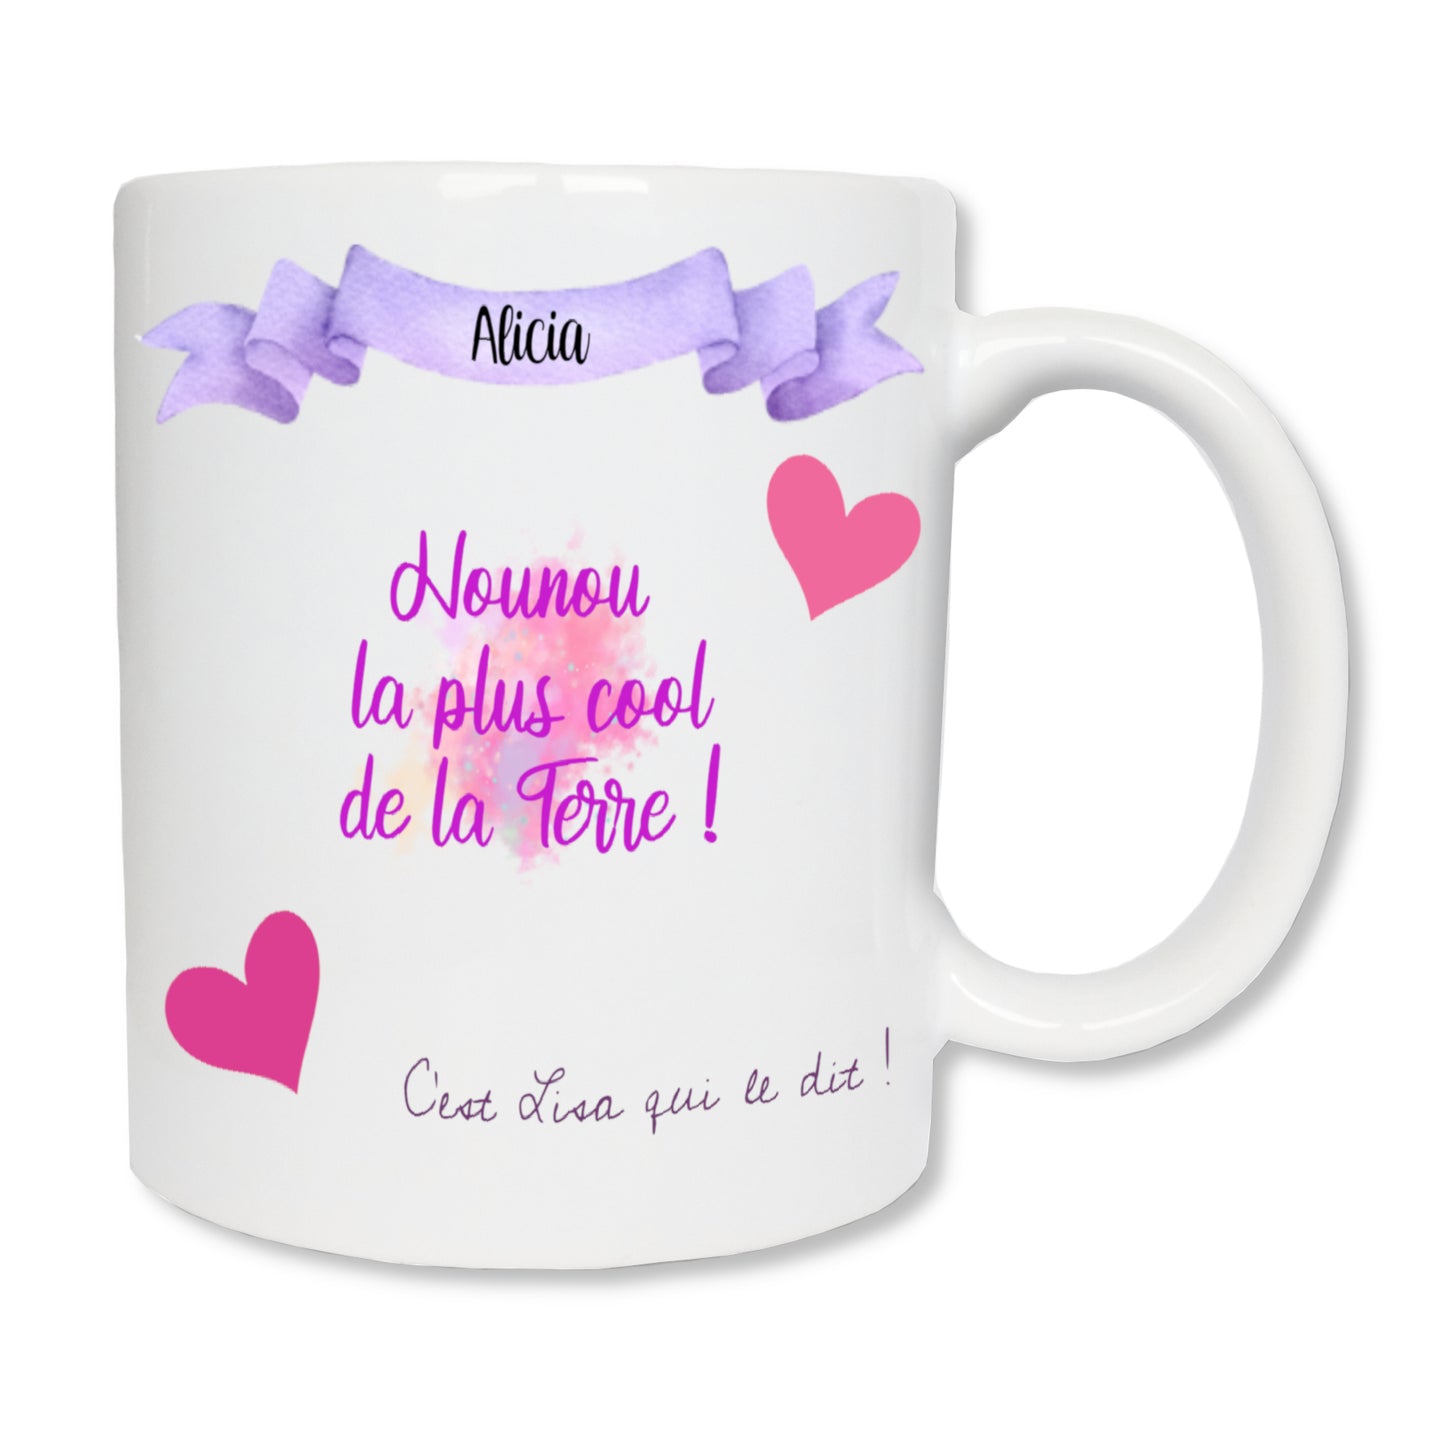 Personalized mug for nannies, atsem, mistresses..